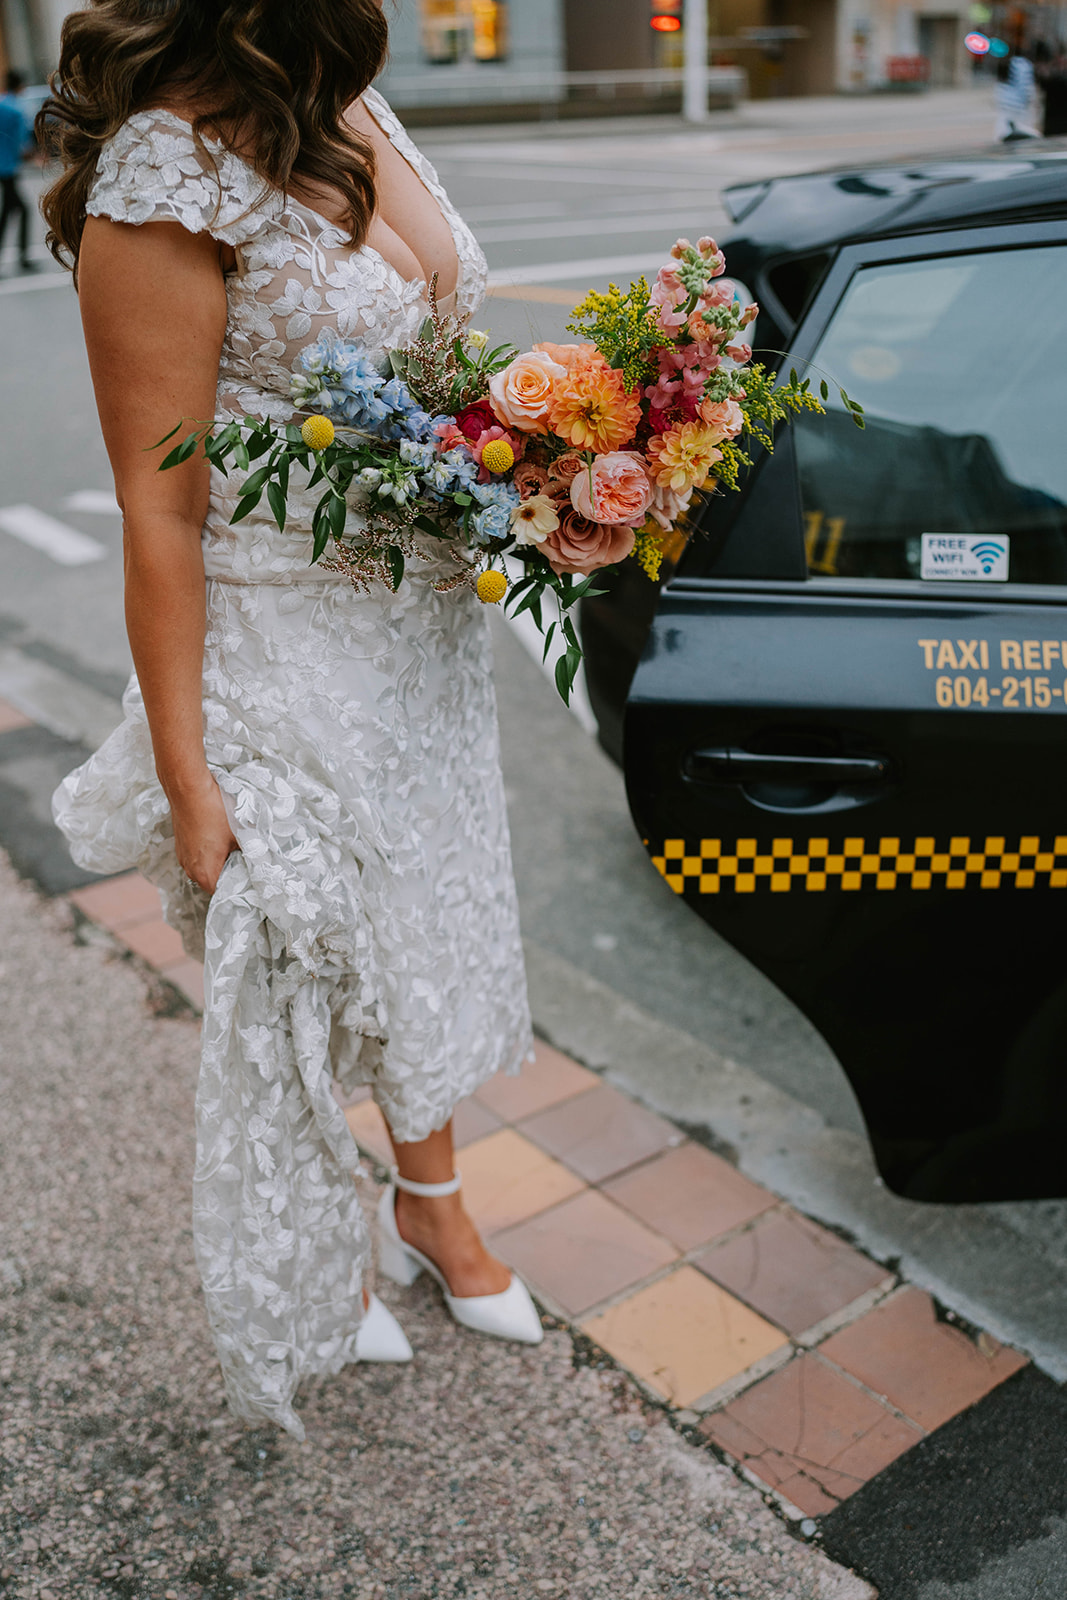 bride getting into taxi